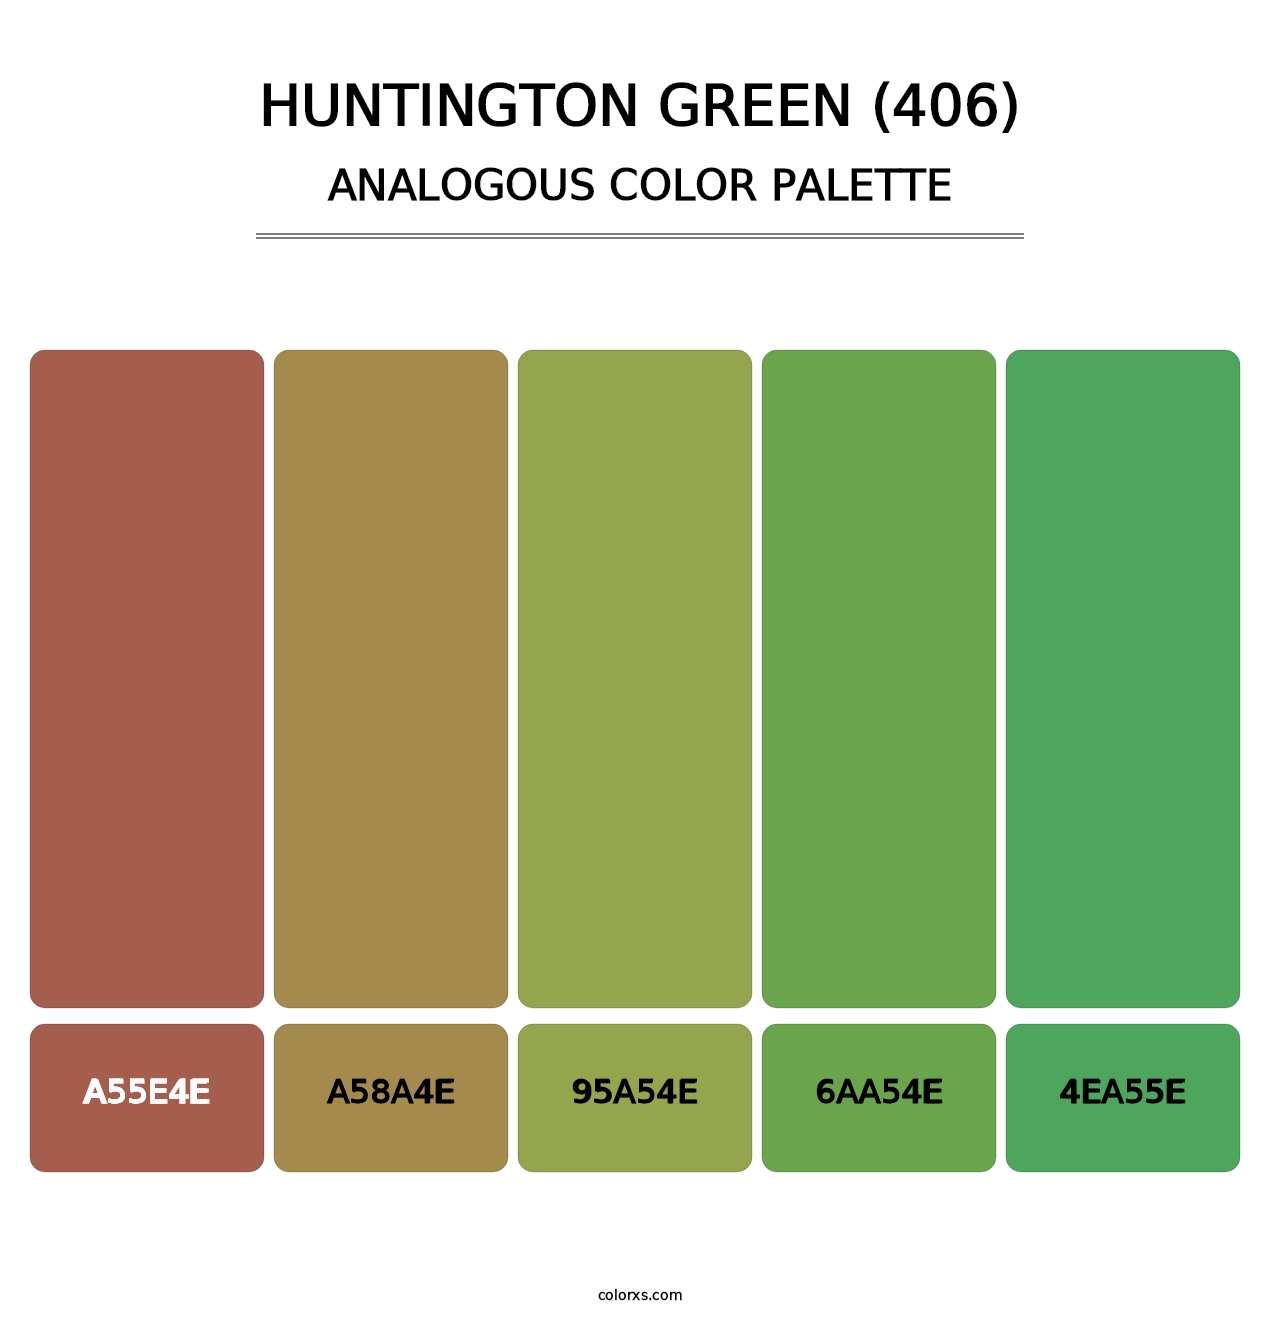 Huntington Green (406) - Analogous Color Palette